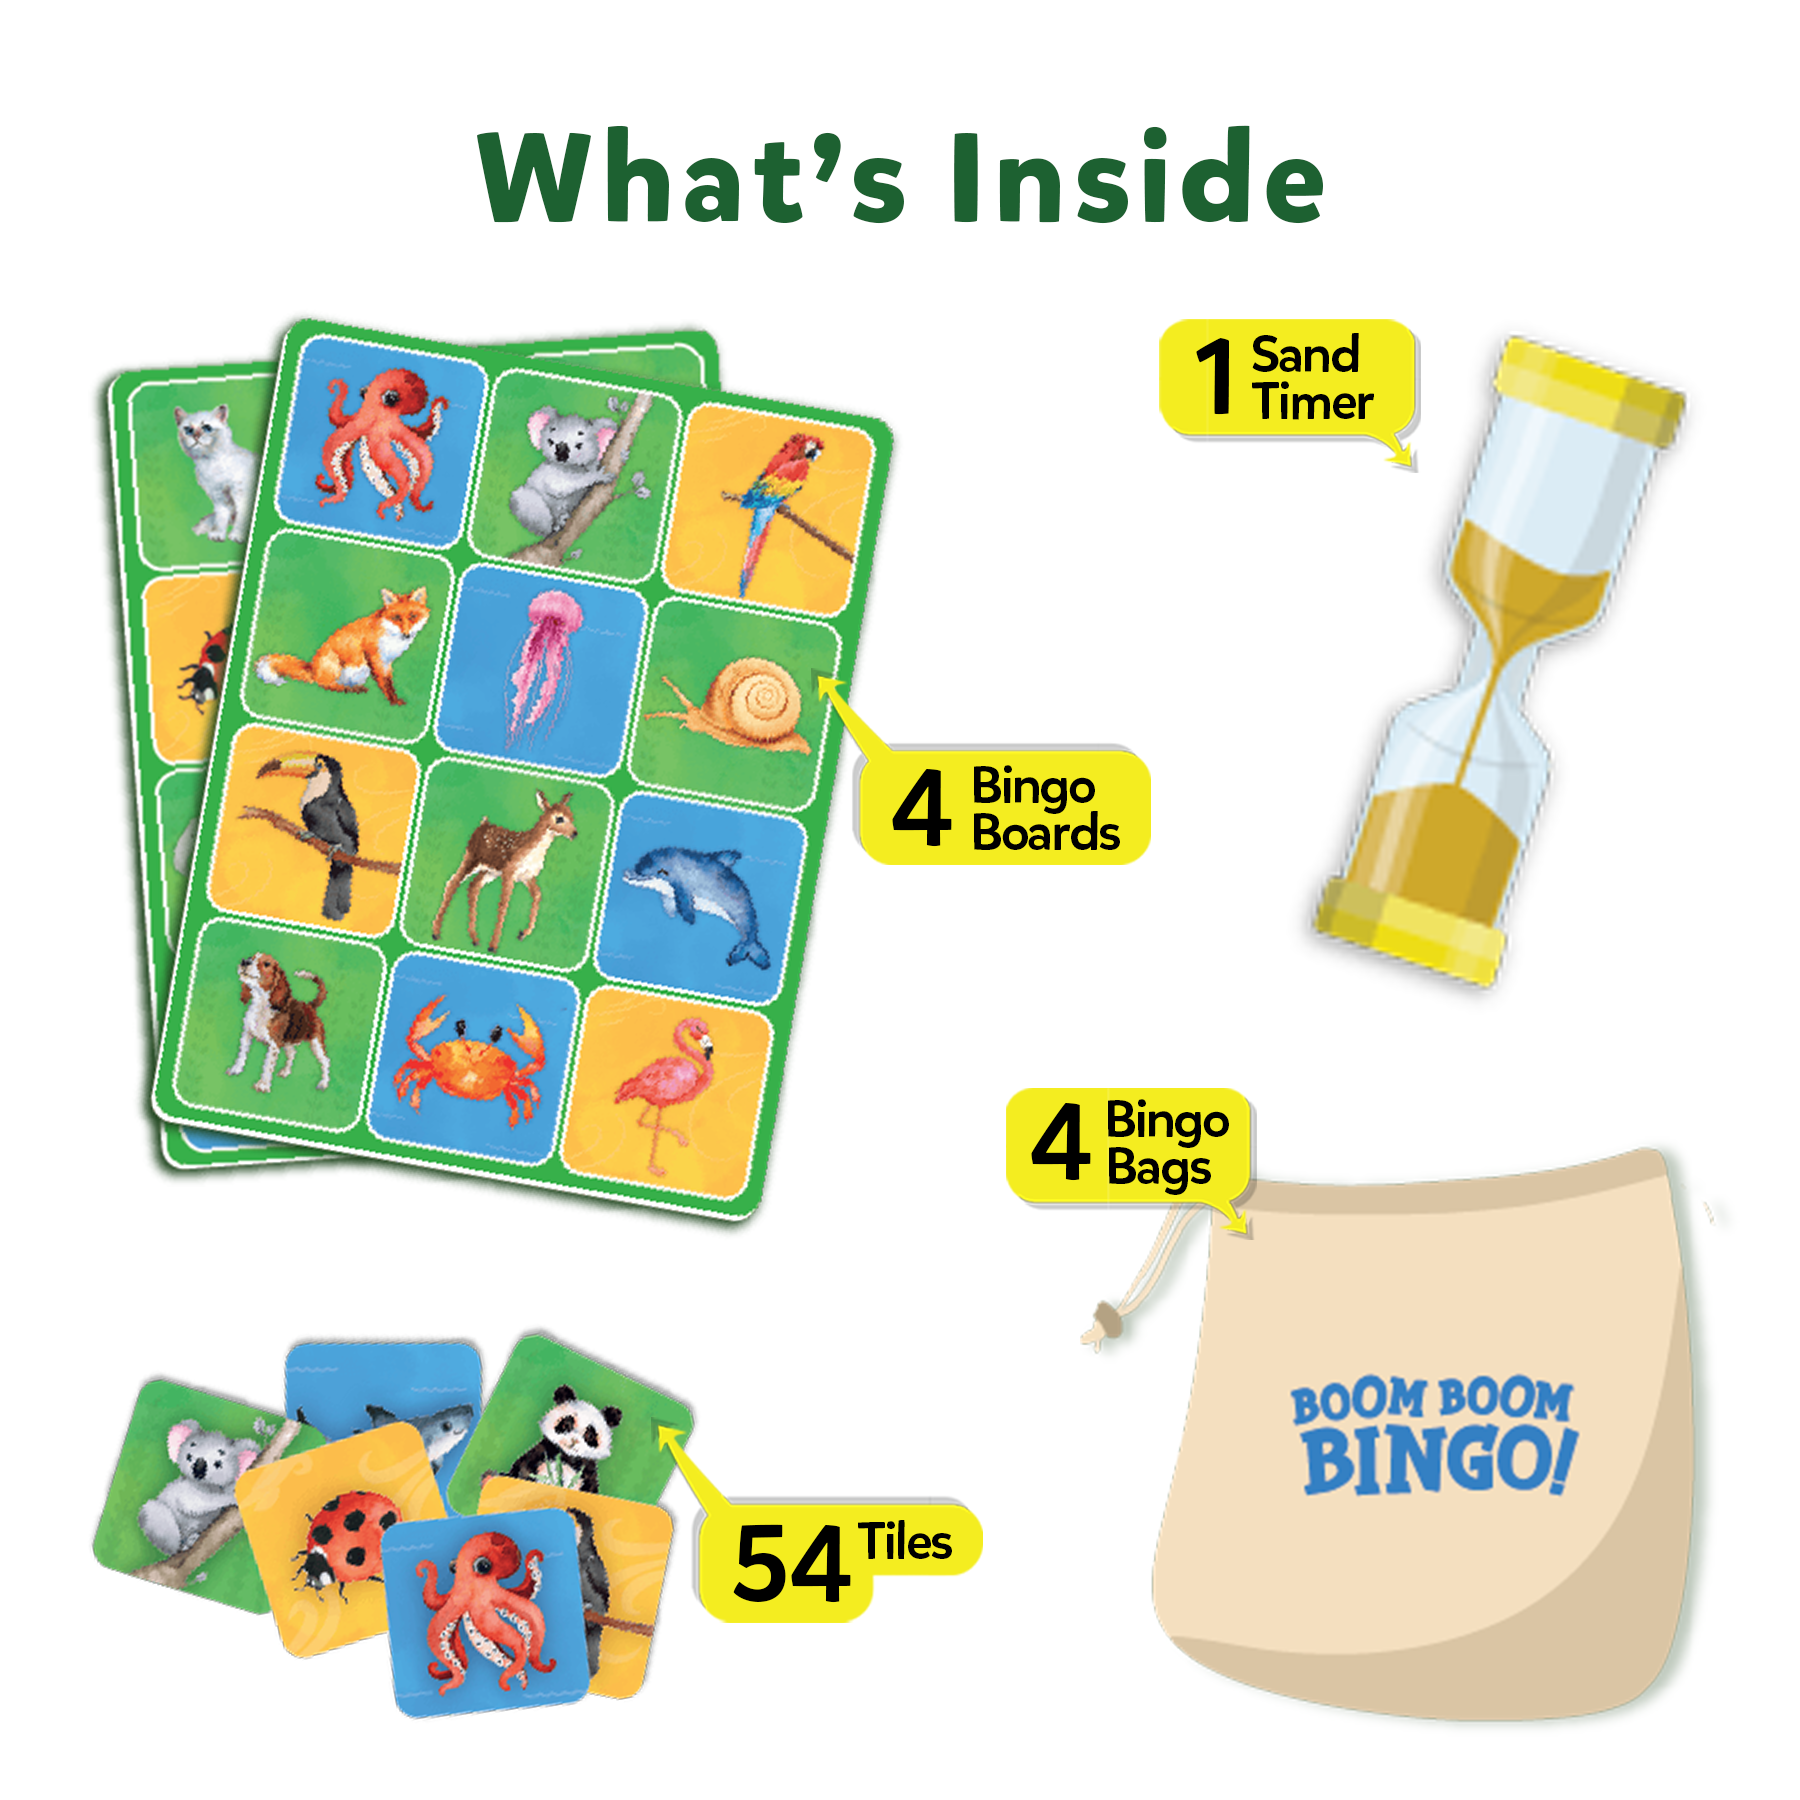 Boom Boom Bingo! Board Game :Animal World